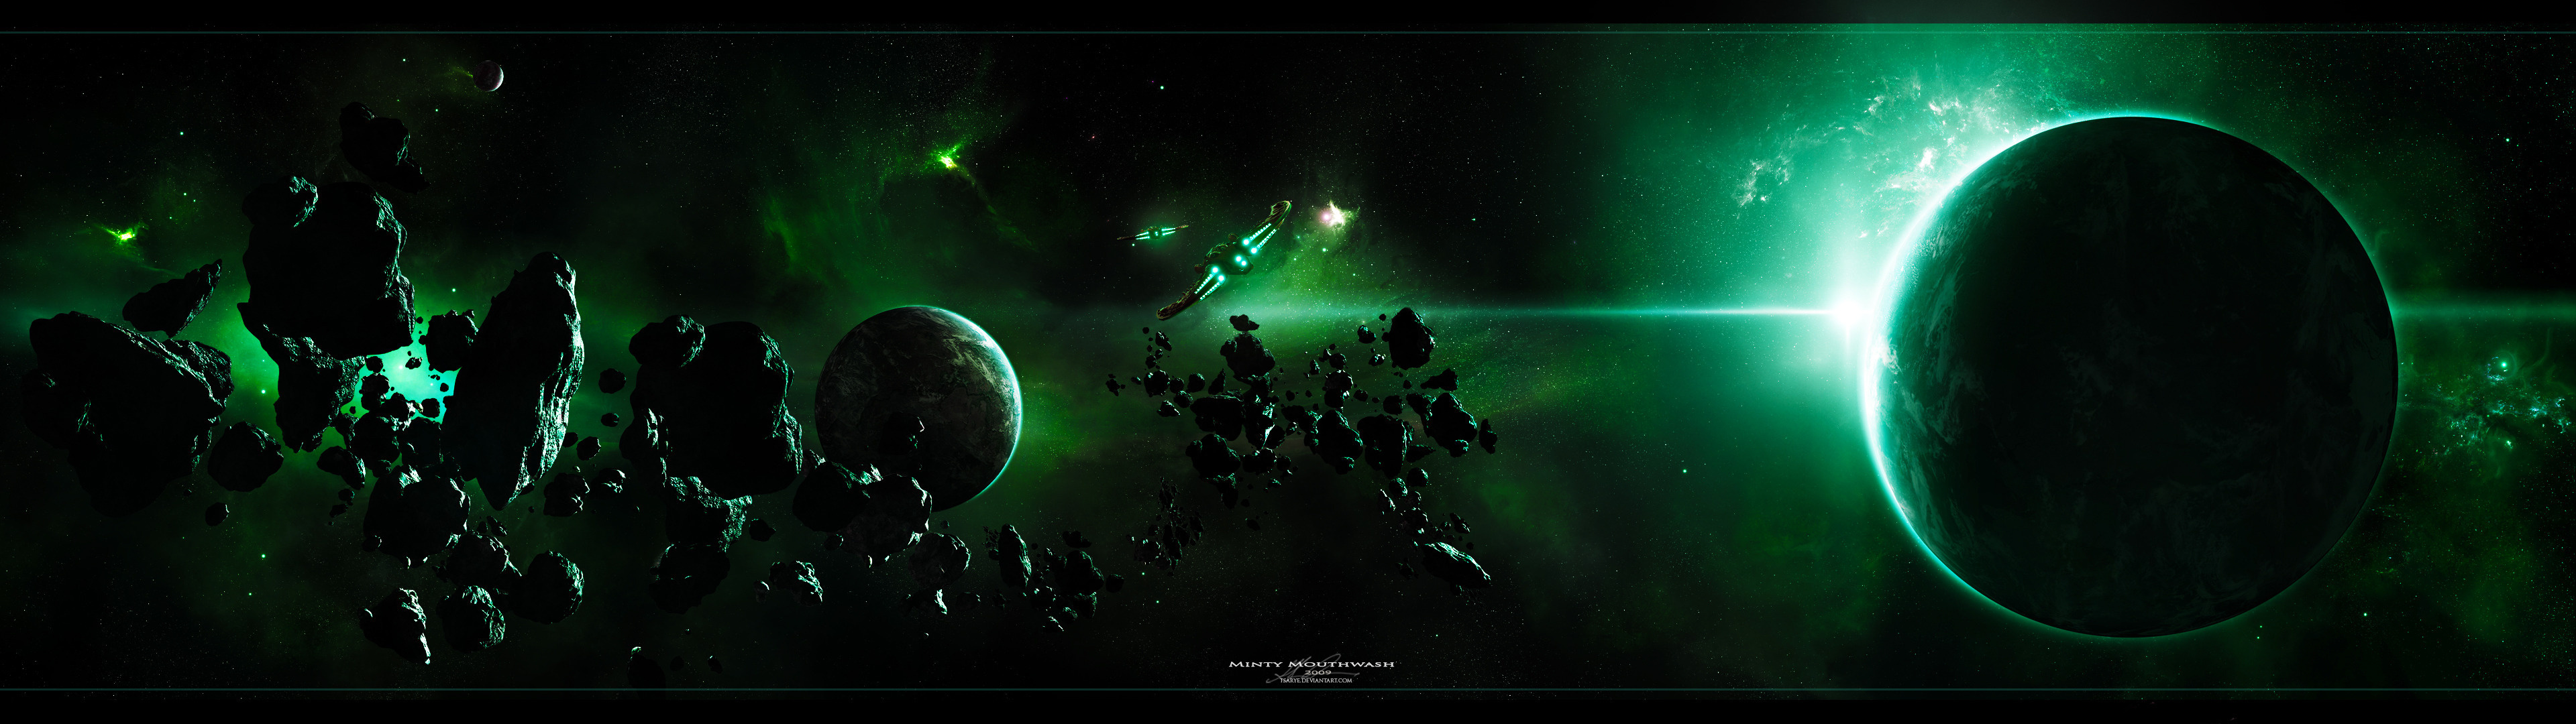 Wallpaper space planet spaceship asteroid desktop wallpaper 3D